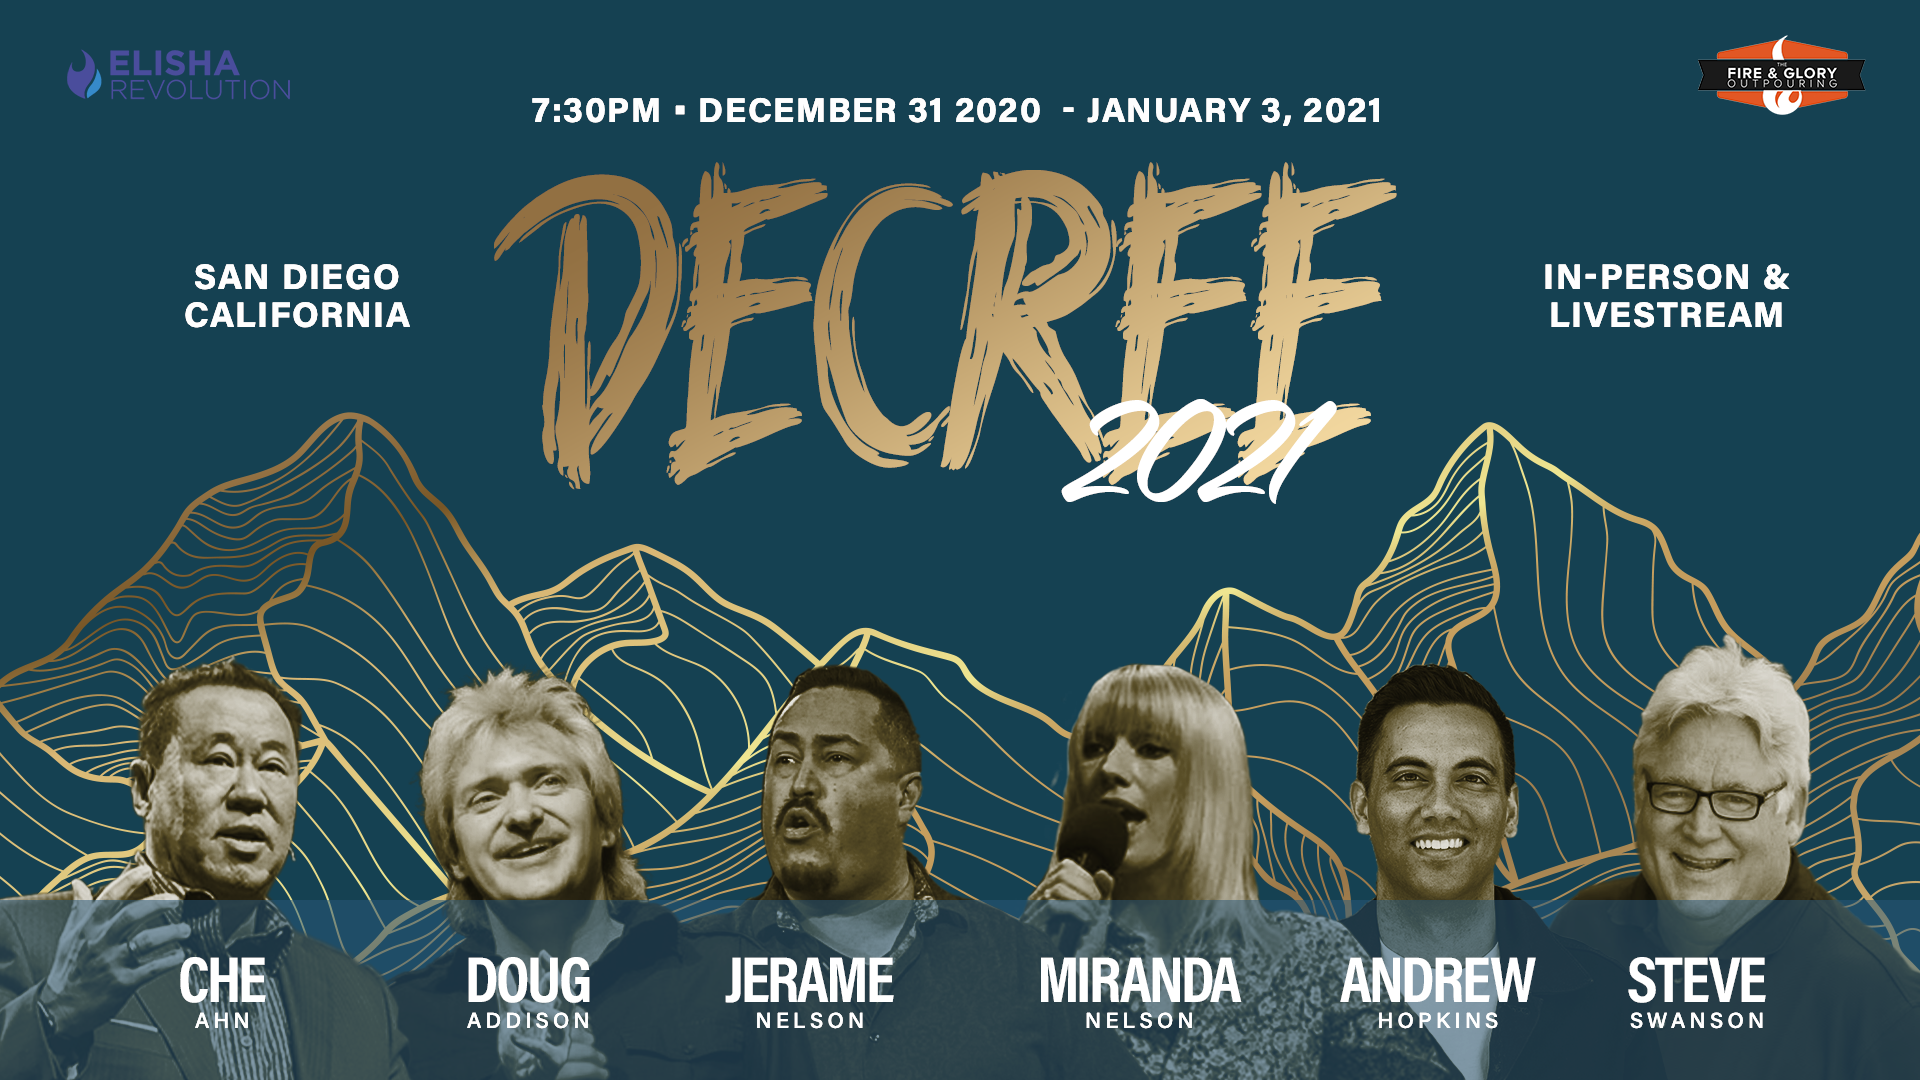 San Diego, CA - DECREE 2021 with Jerame & Miranda Nelson, Che Ahn, Doug Addison, and more